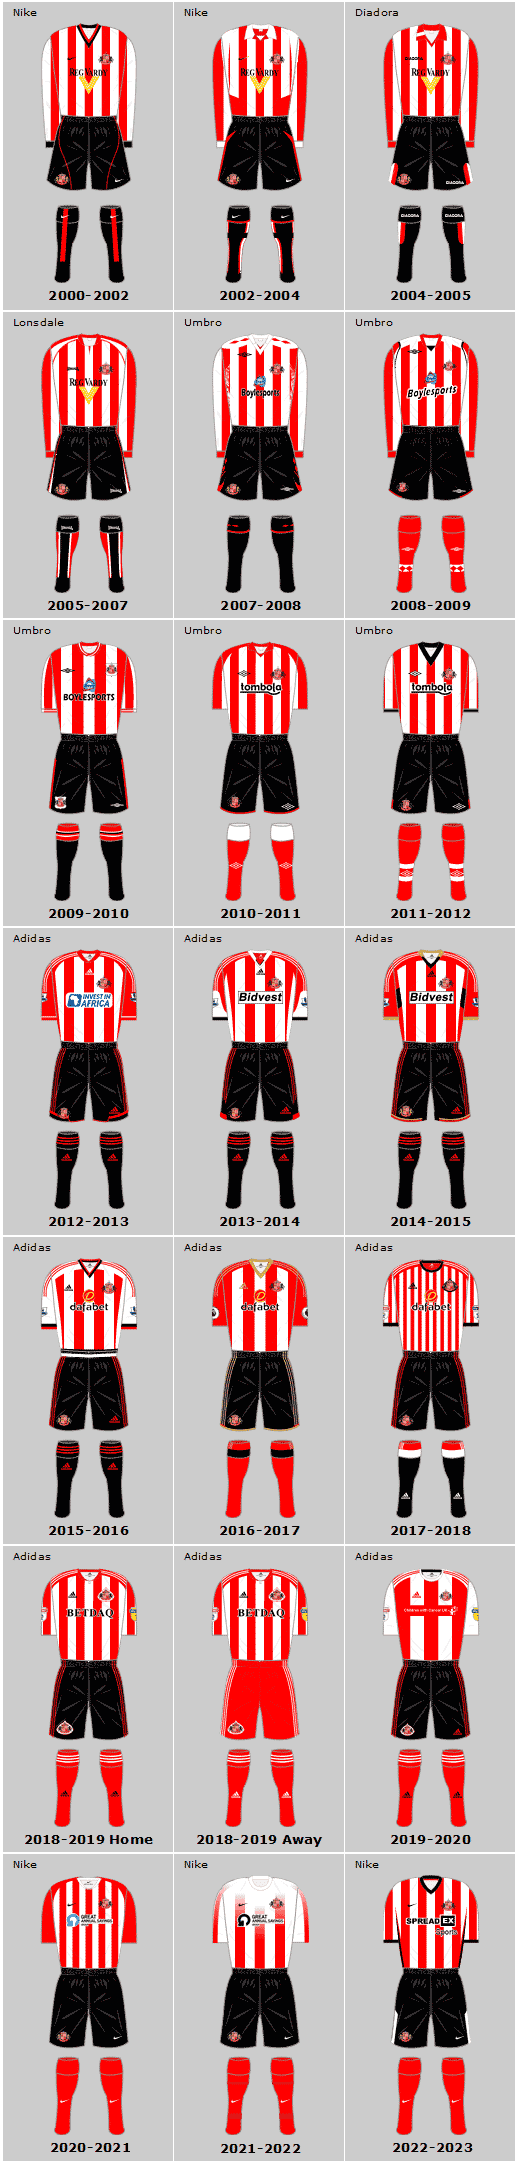 Sunderland AFC 21st Century Home Playing Kits